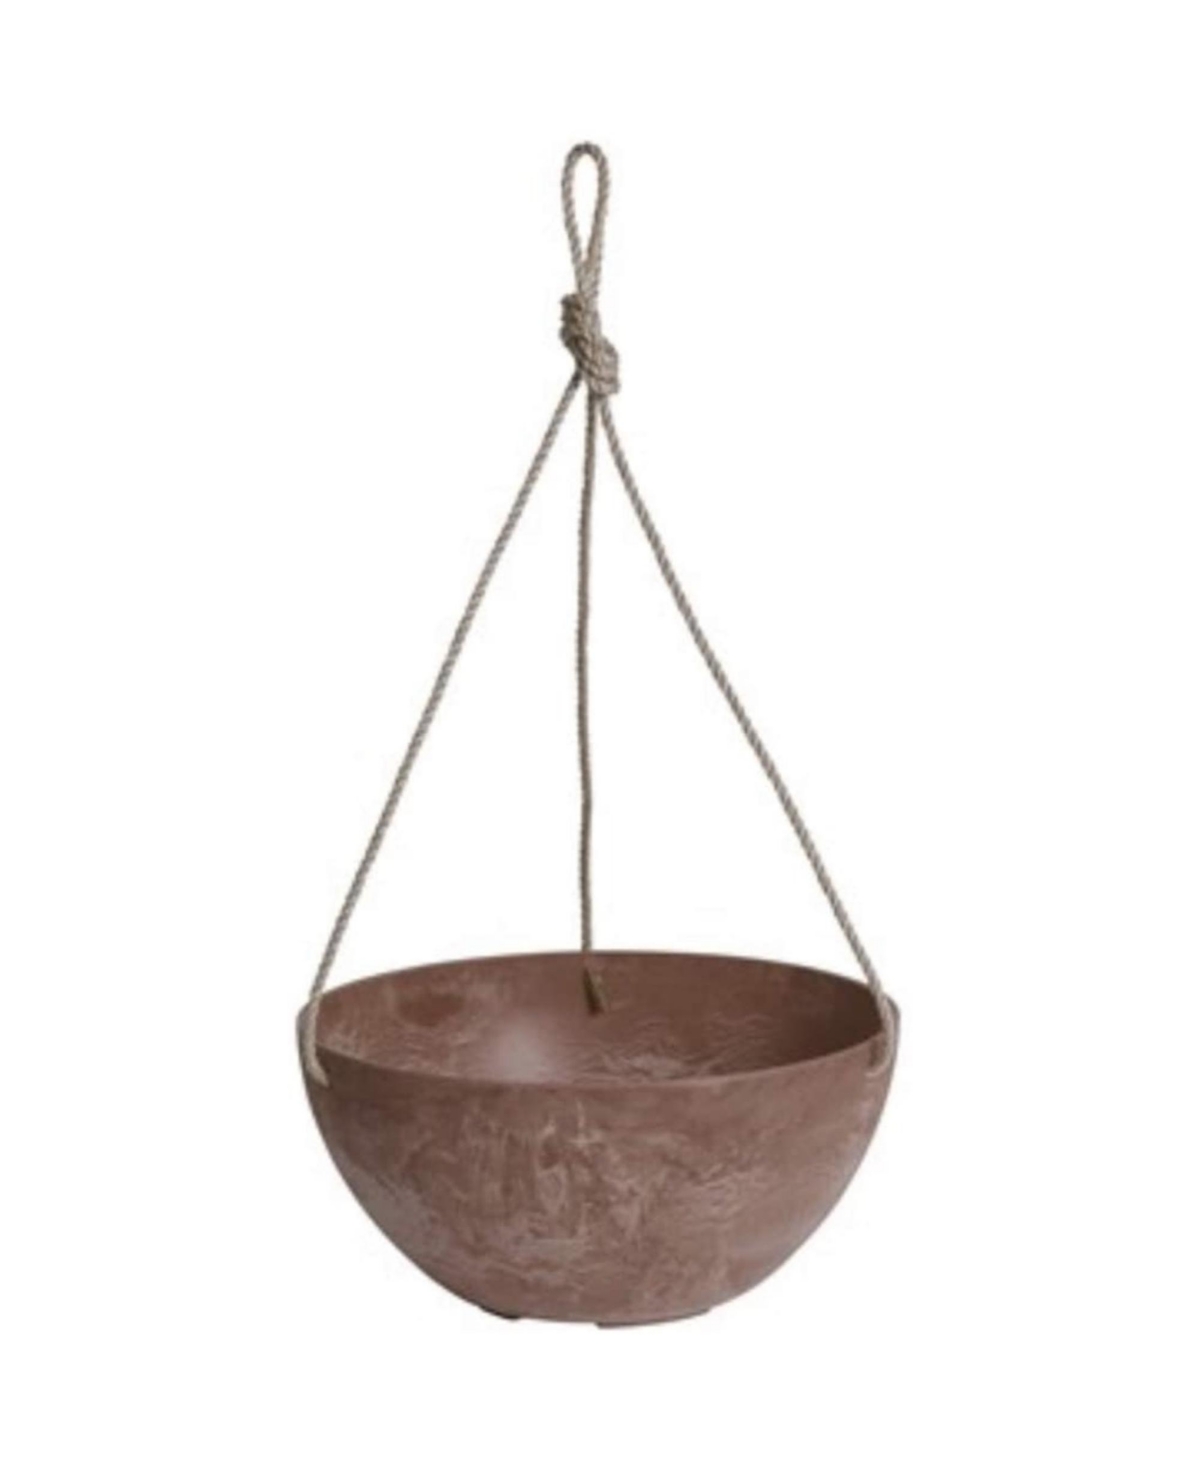 Artstone Hanging Bowl Planter/Flower Pot, Rust, 12" - Brown